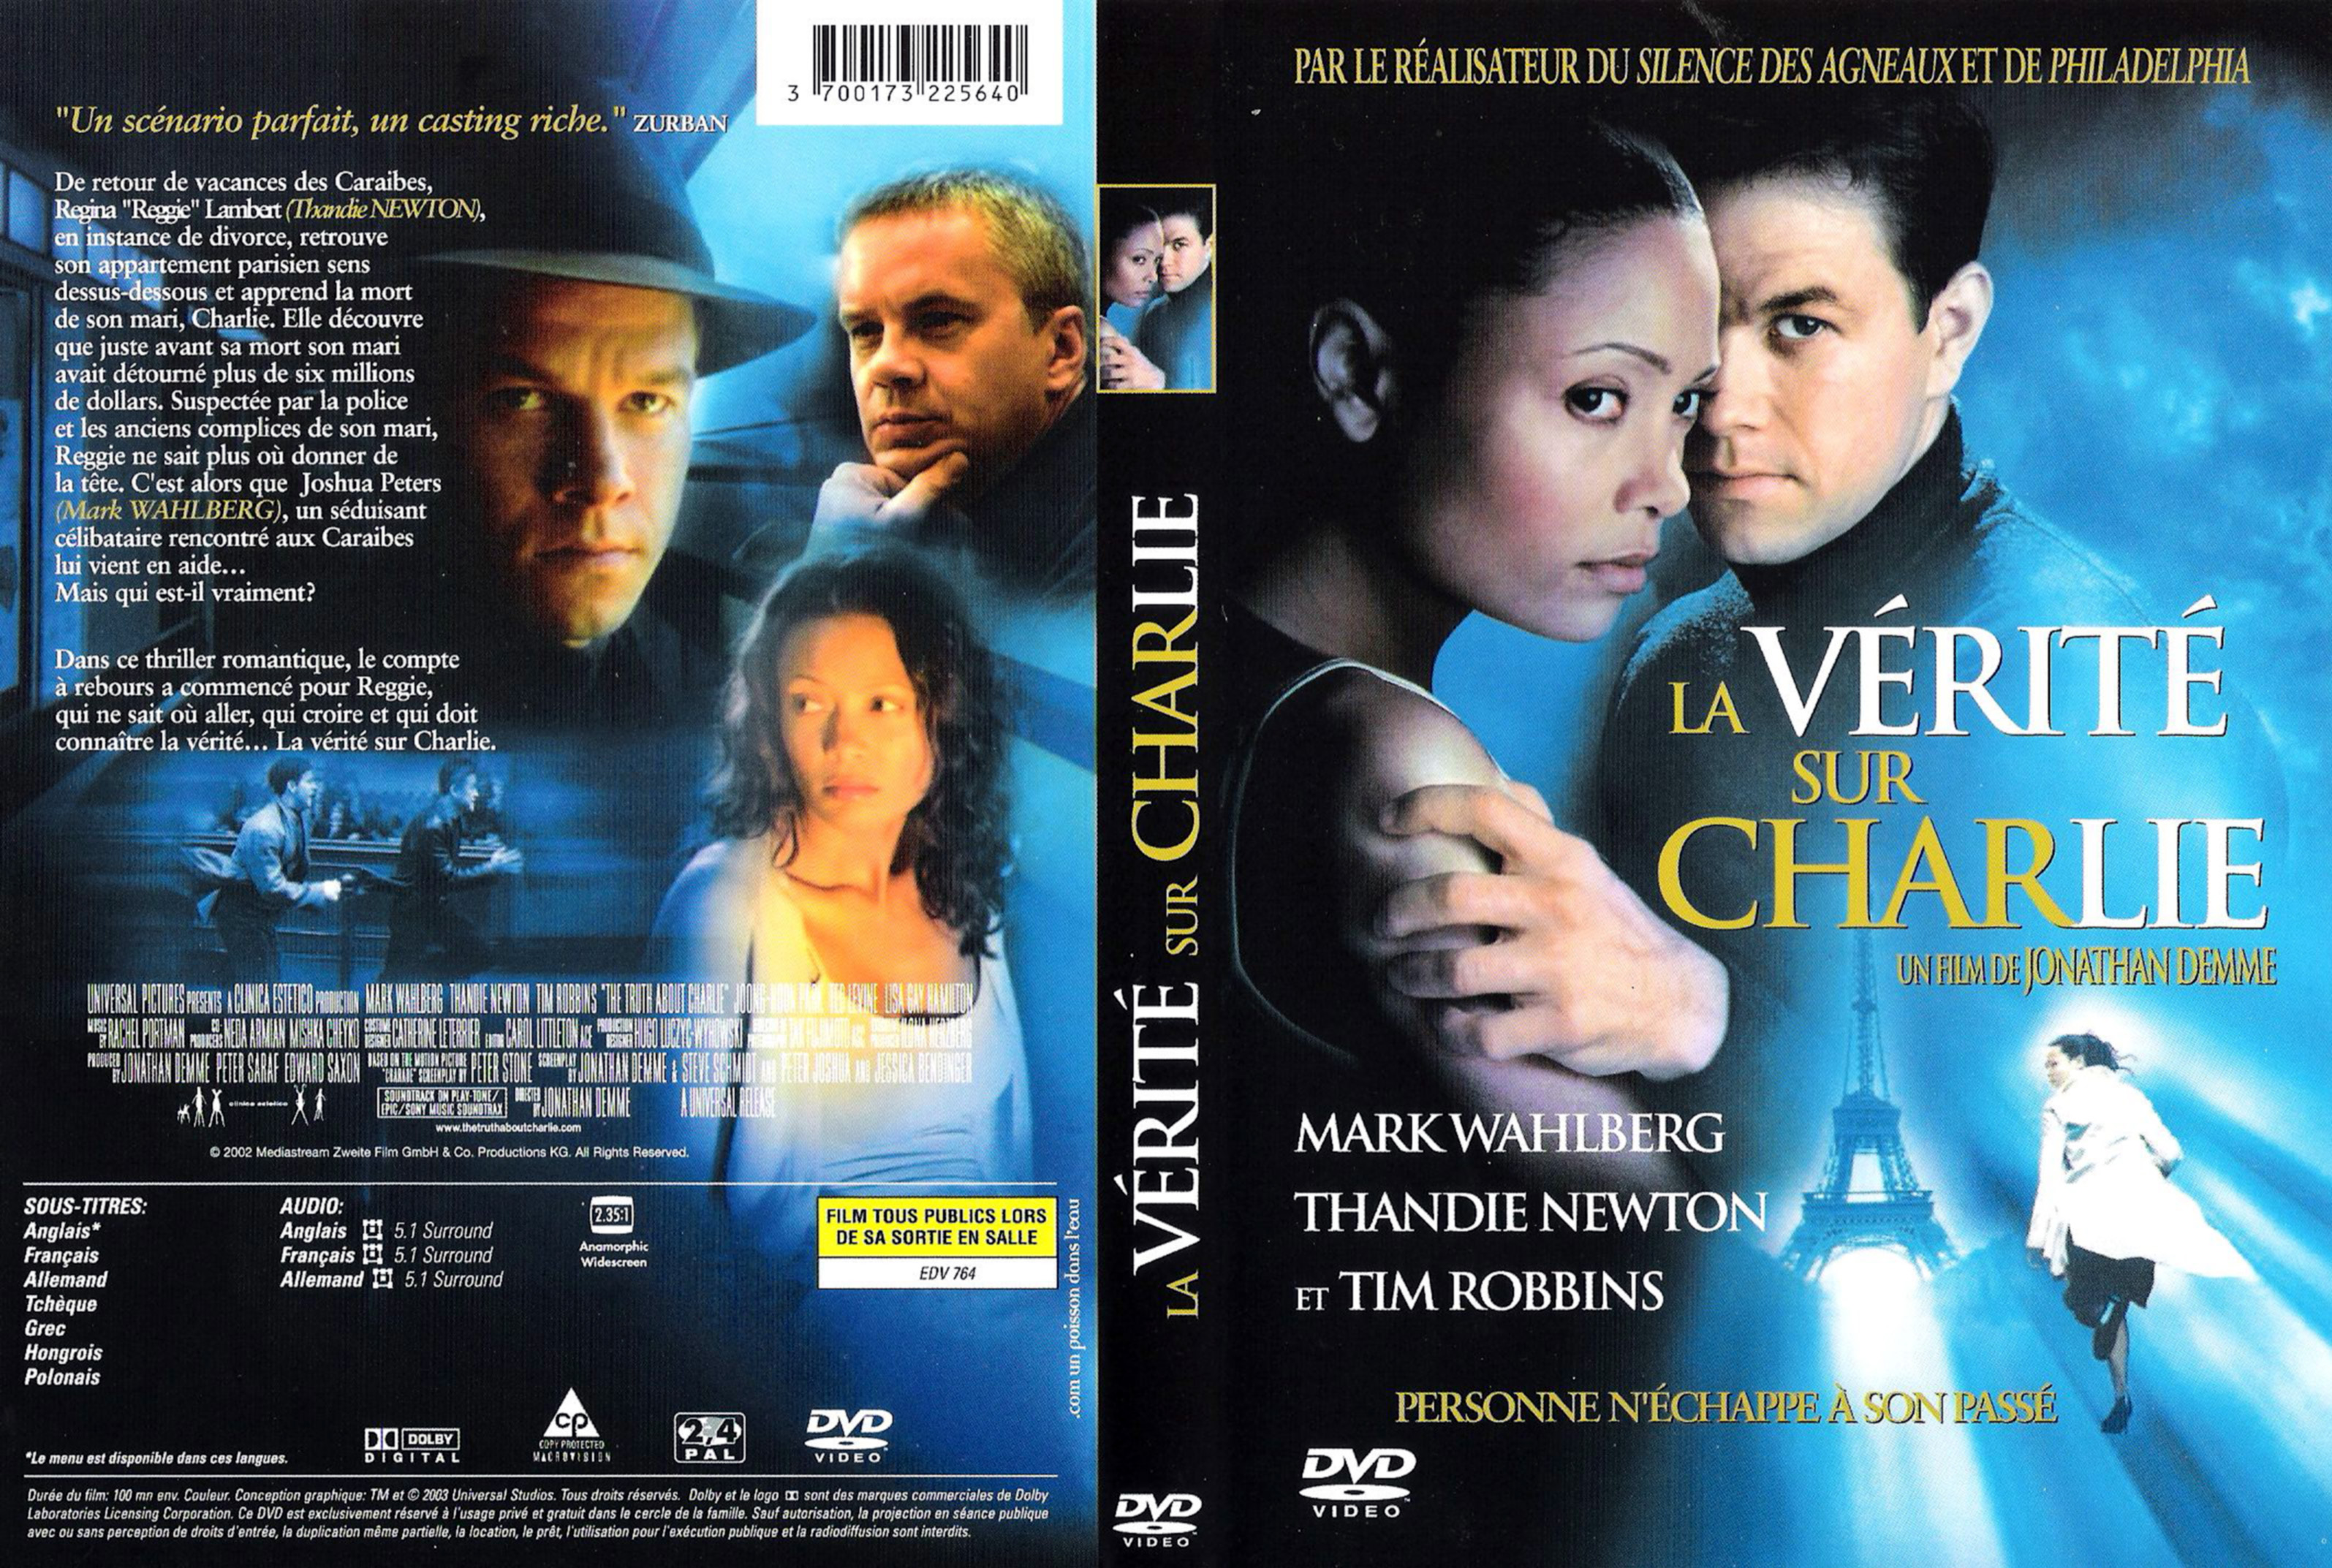 Jaquette DVD La vrit sur Charlie v2